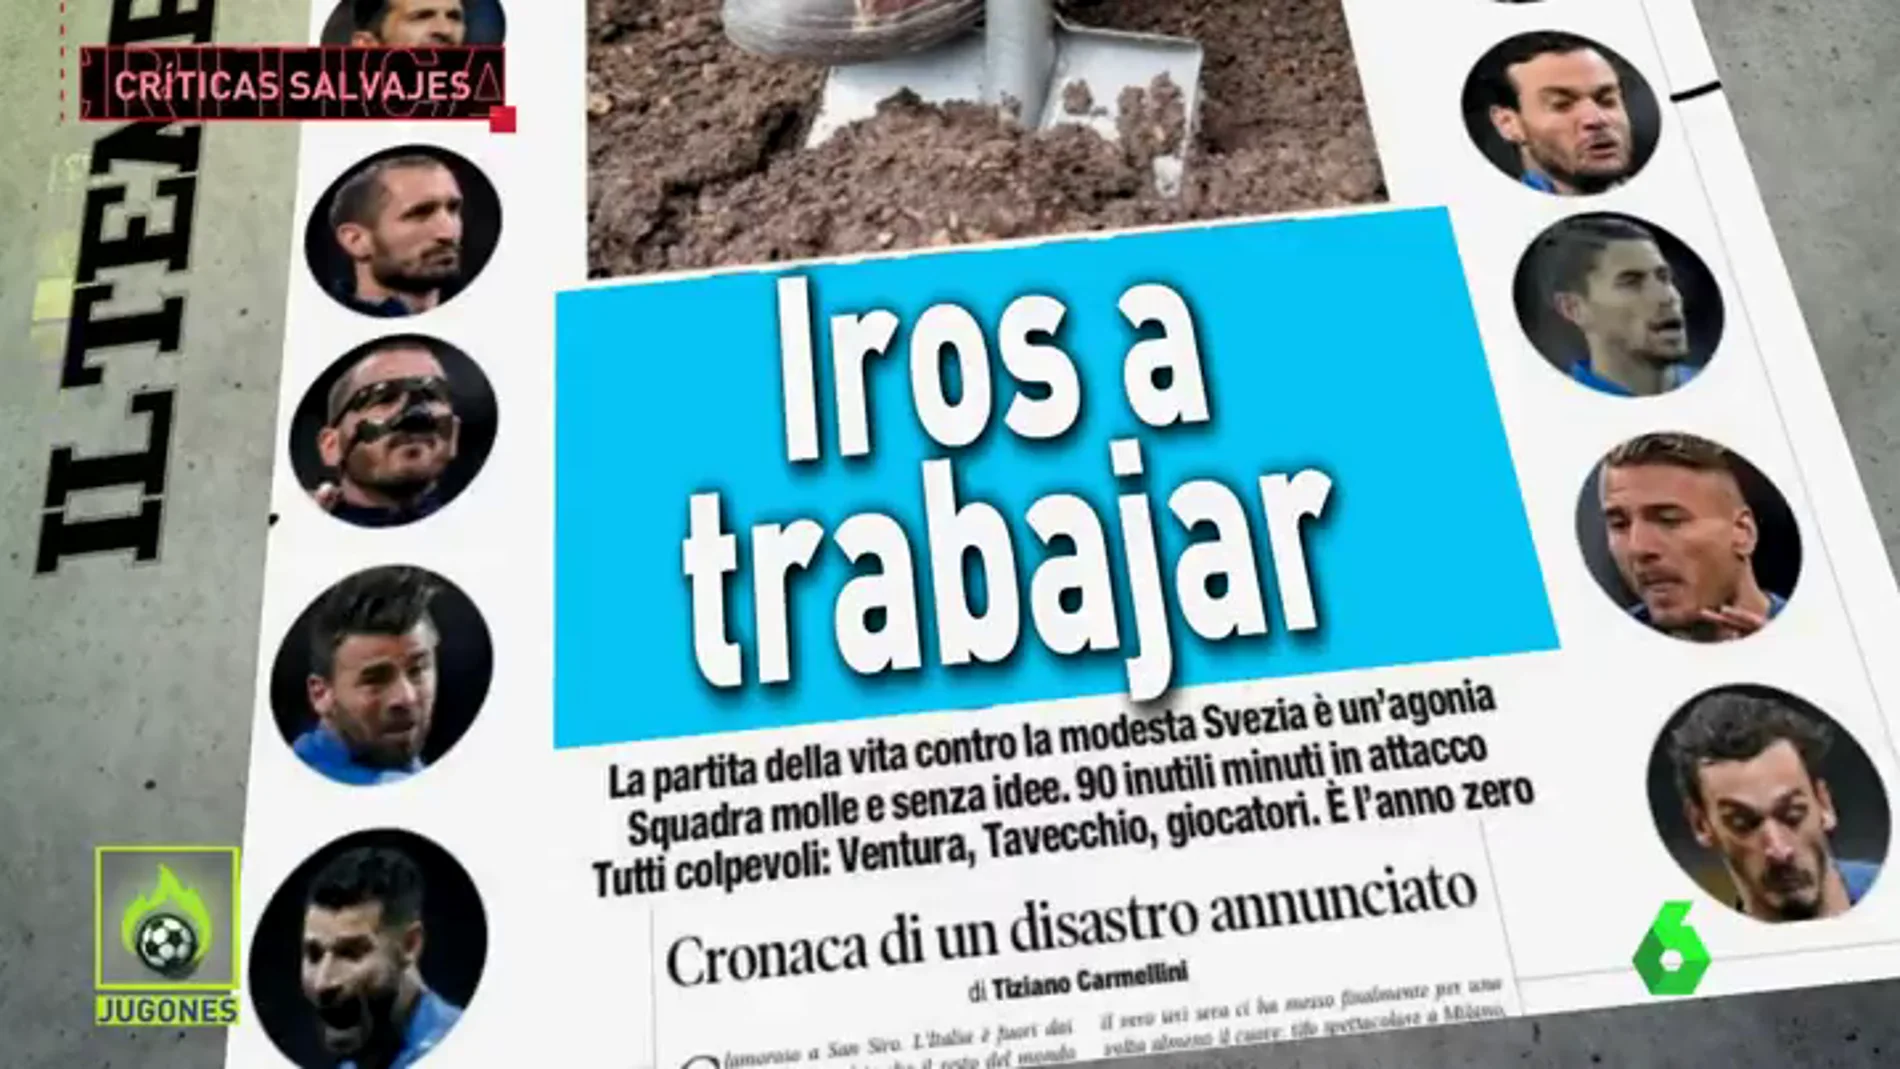 "Apocalipsis azzurra", "Todos a casa", "Fin": la prensa italiana carga contra la 'Azzurra'